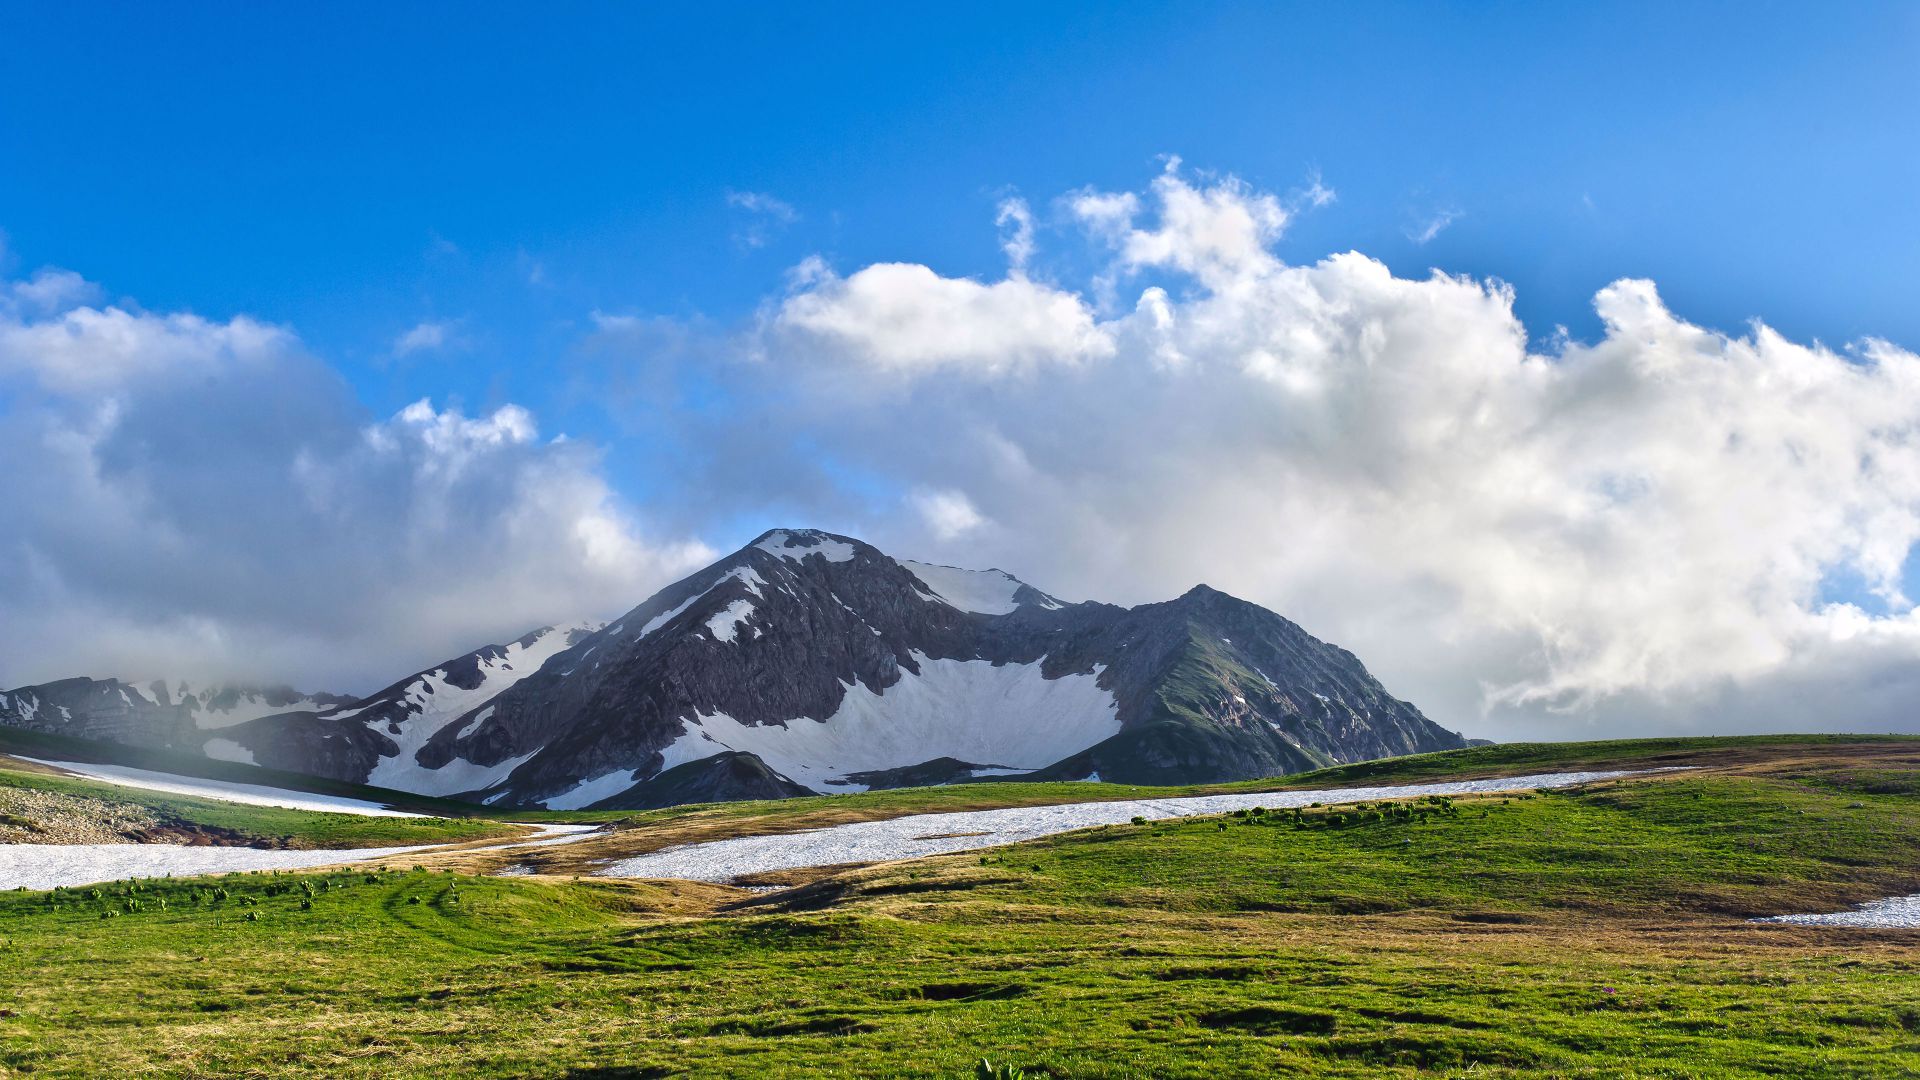 Фудзи, 5k, 4k, Япония, луга, горы, облака, Fuji, 5k, 4k wallpaper, Japan, meadows, mountains, clouds (horizontal)